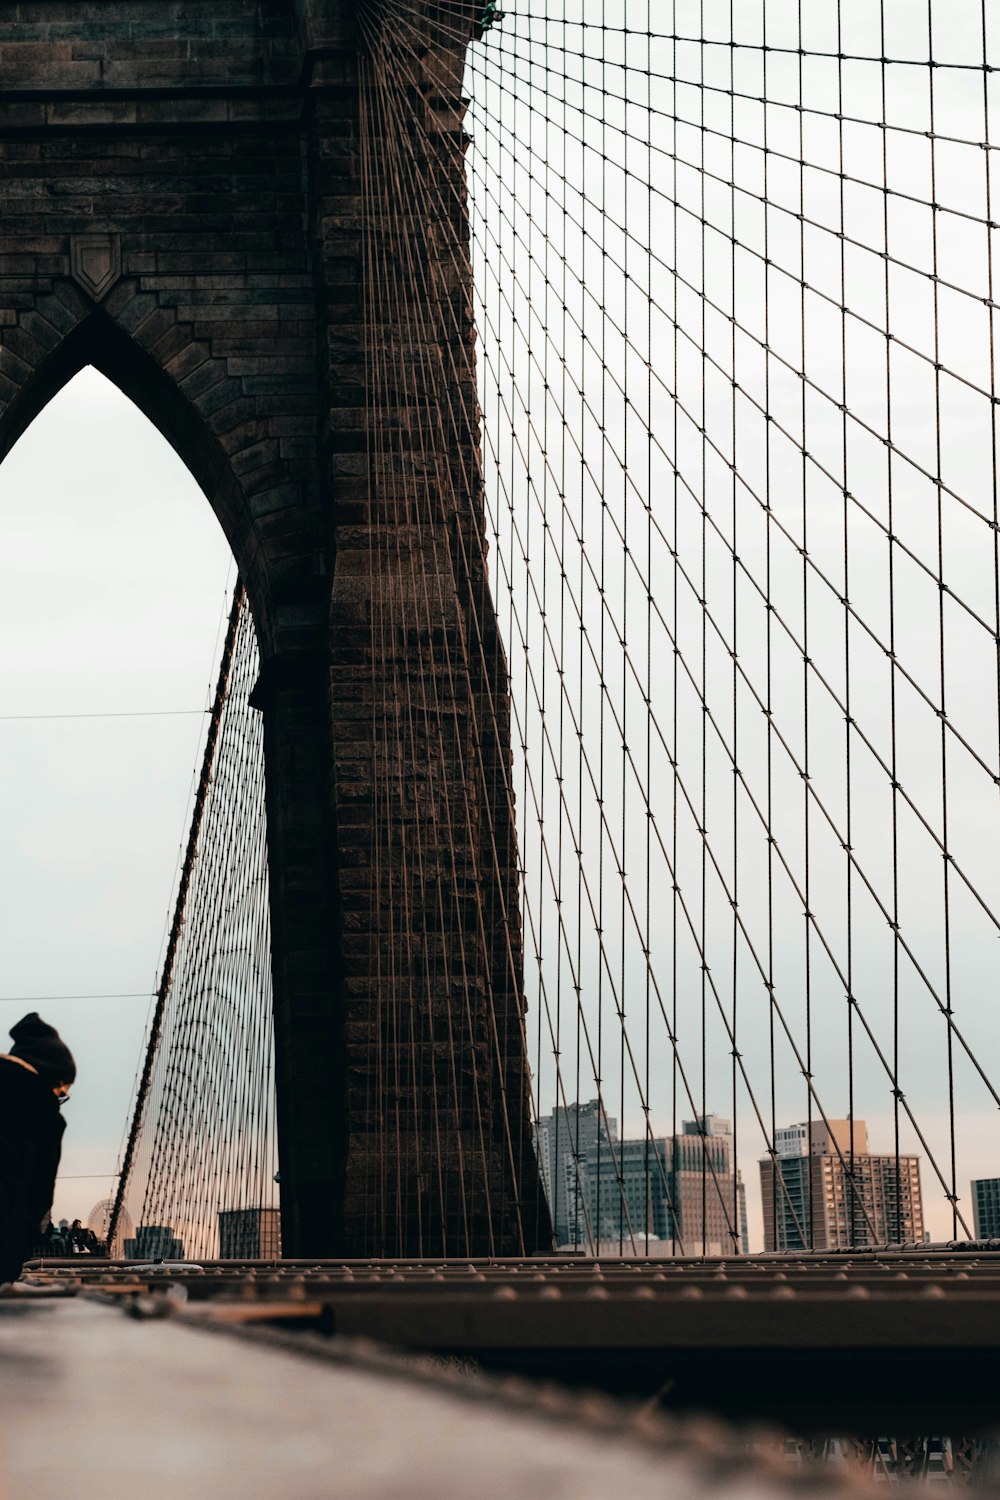 Brooklyn Bridge in New York city during daytime